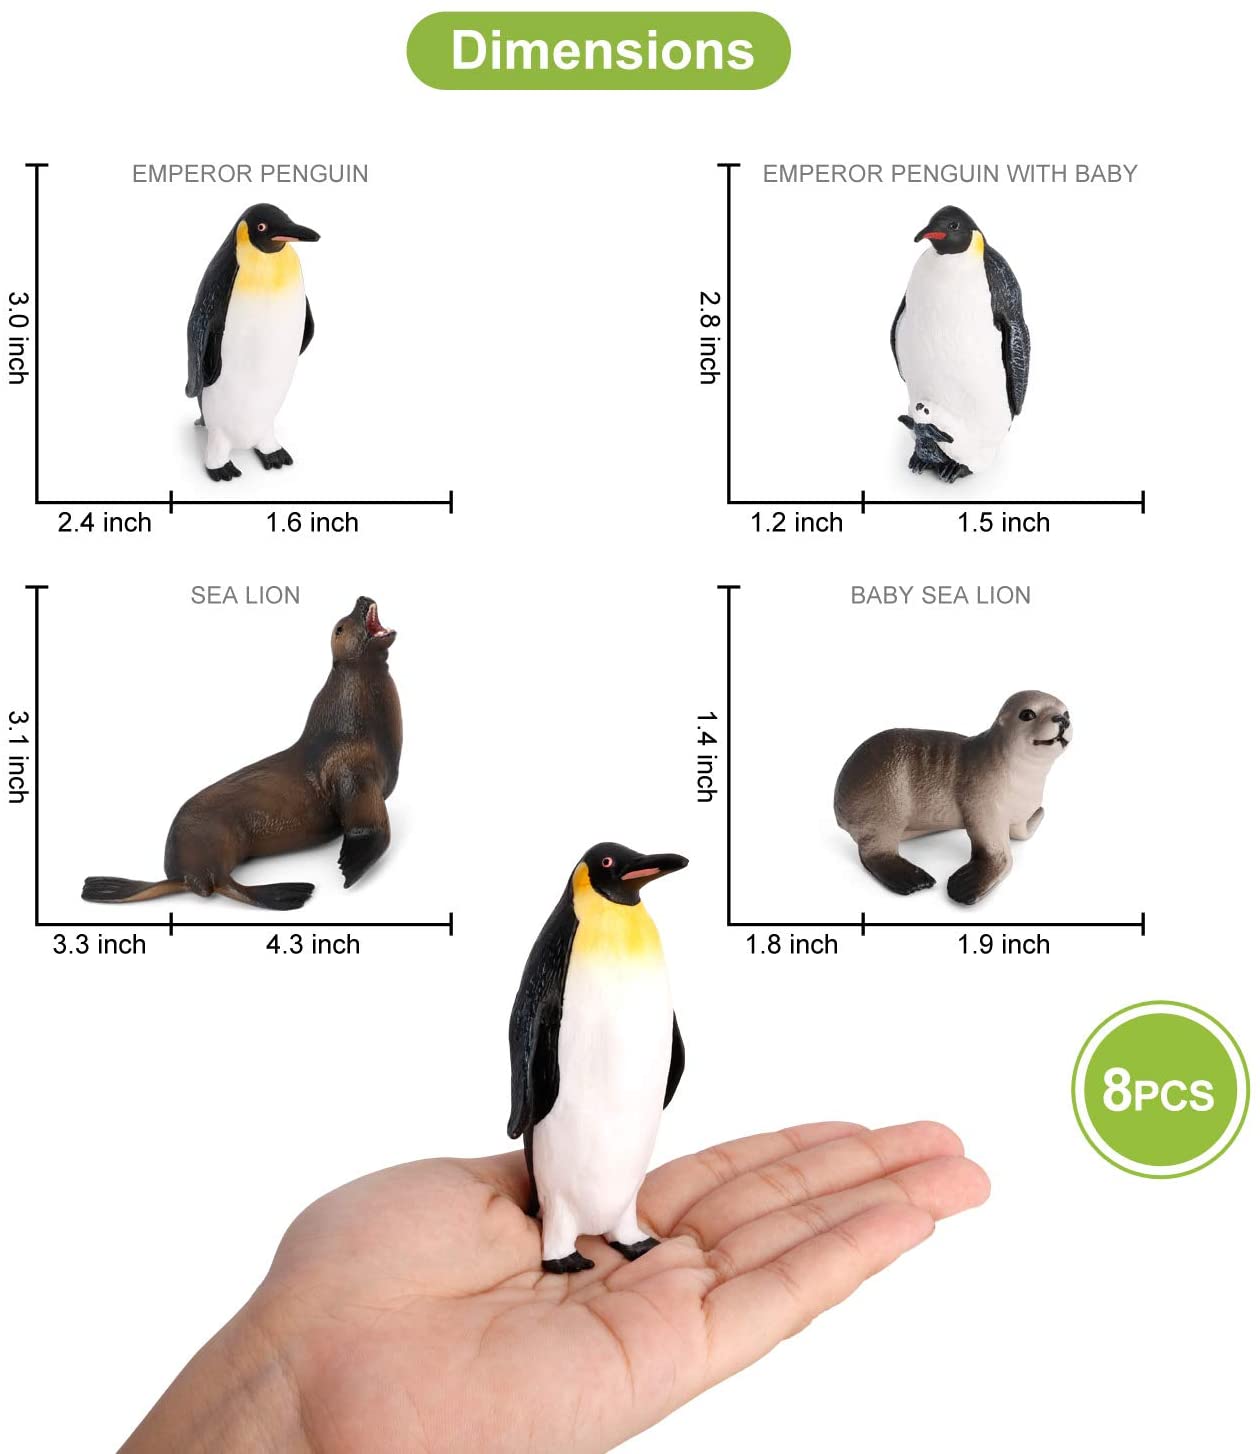 8pcs Plastic cute Ocean Animal Small Penguin Figure Model Toy 0cn 